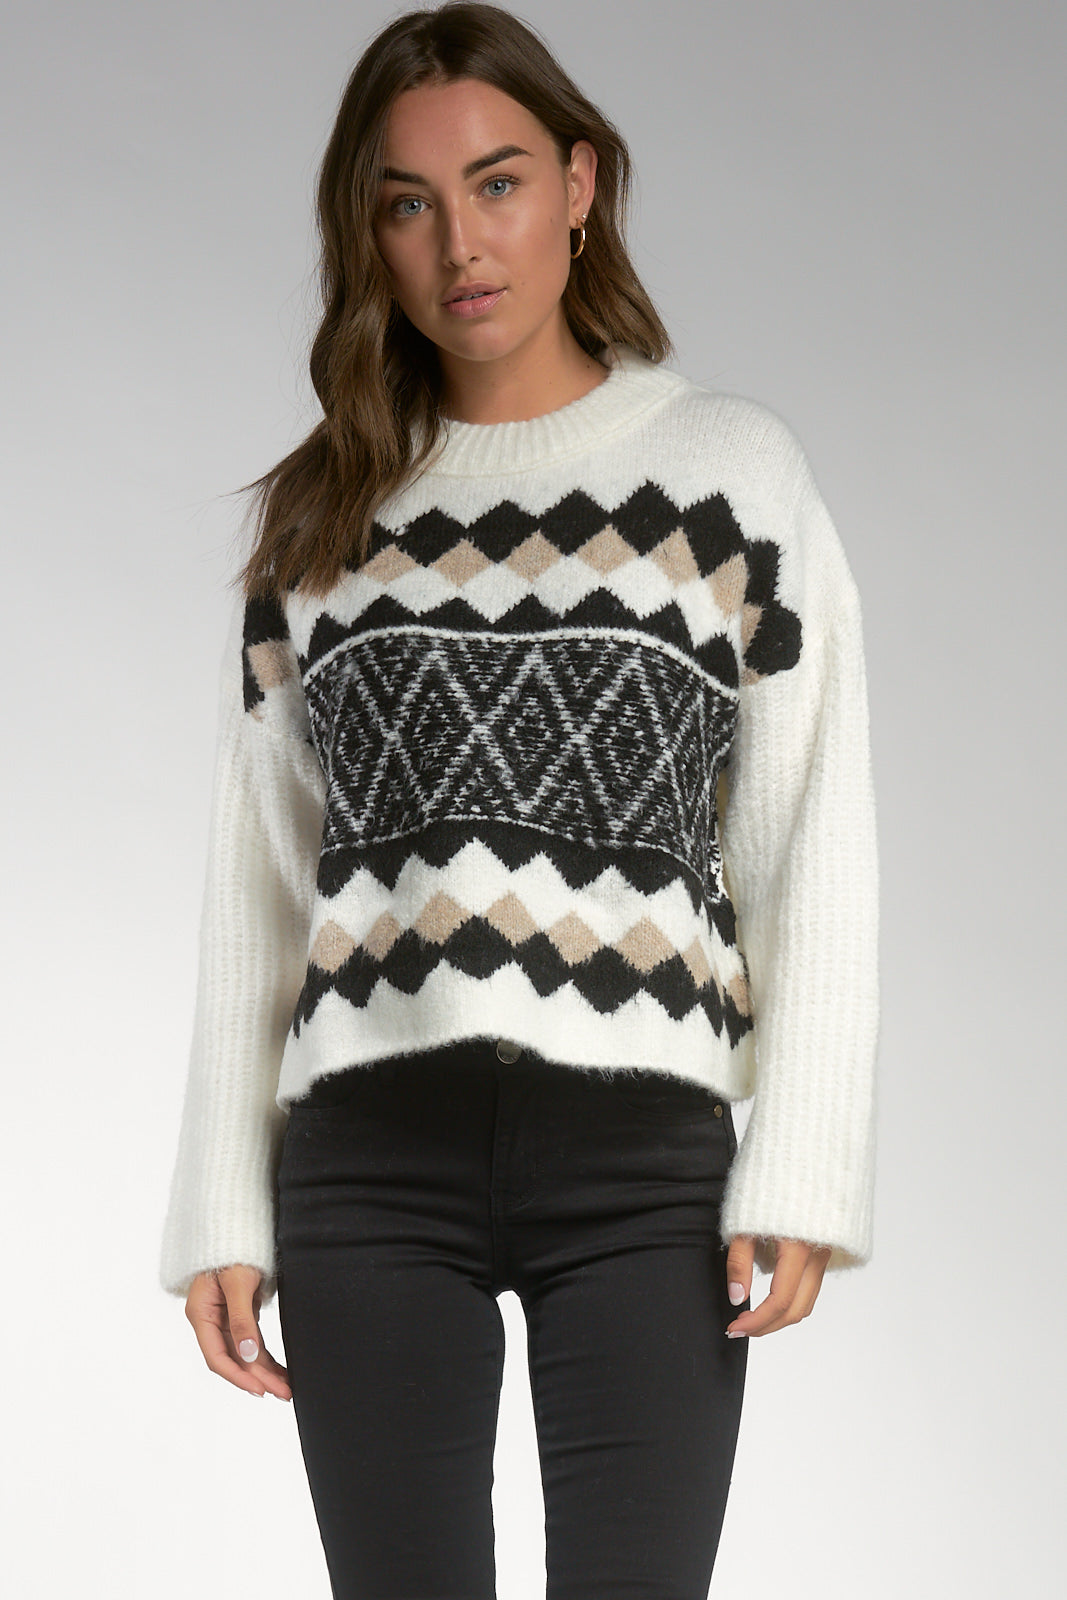 Ivory/Black Tribal Print Crew Neck Sweater